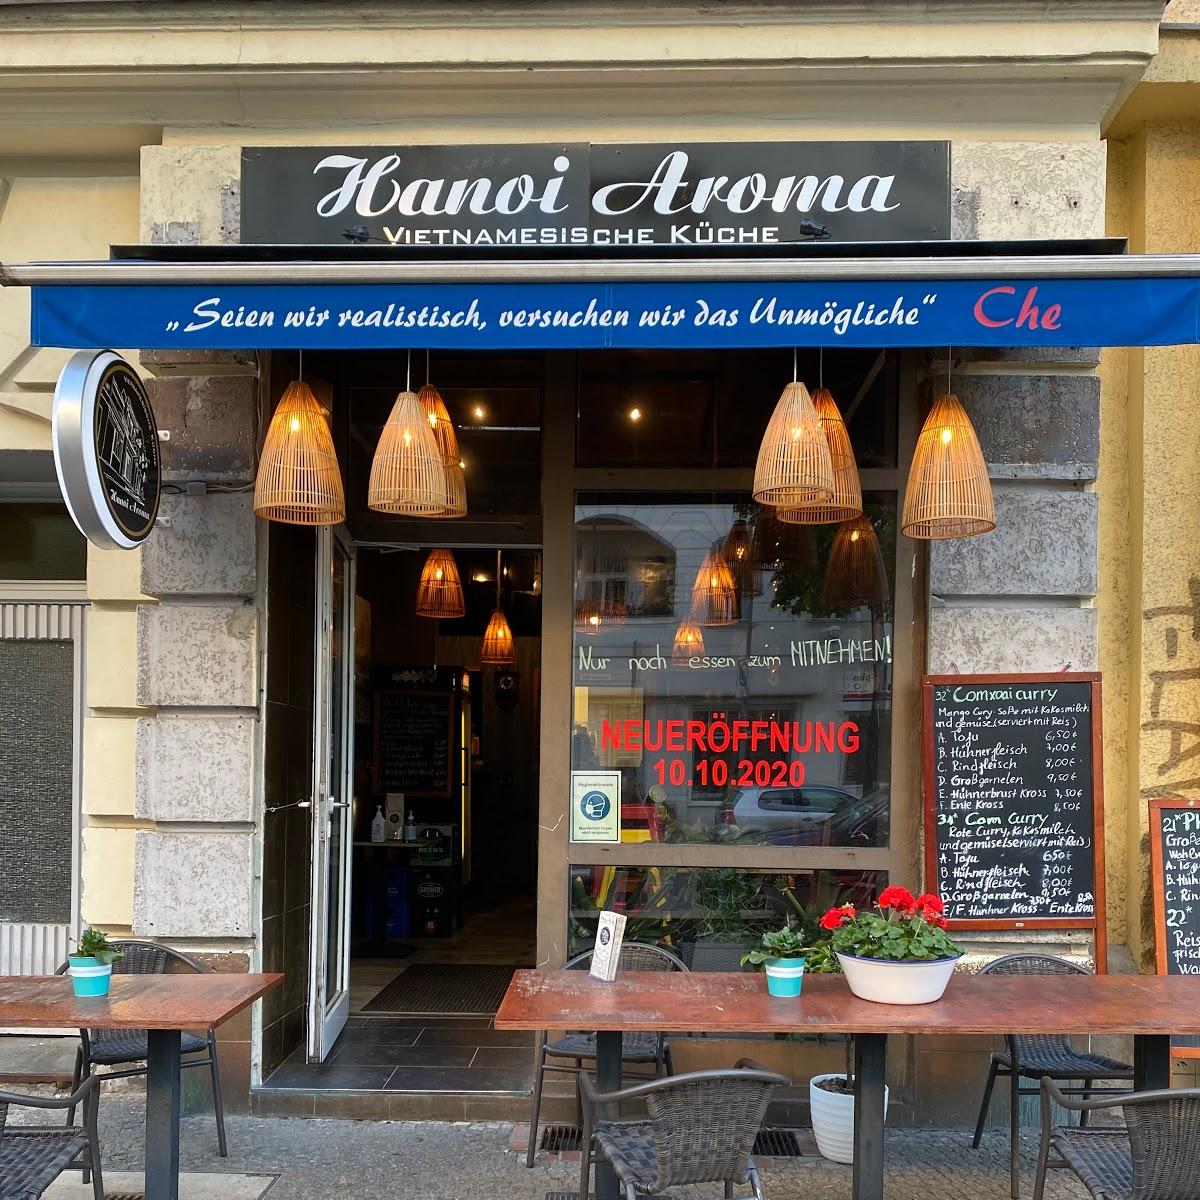 Restaurant "Hanoi Aroma" in Berlin